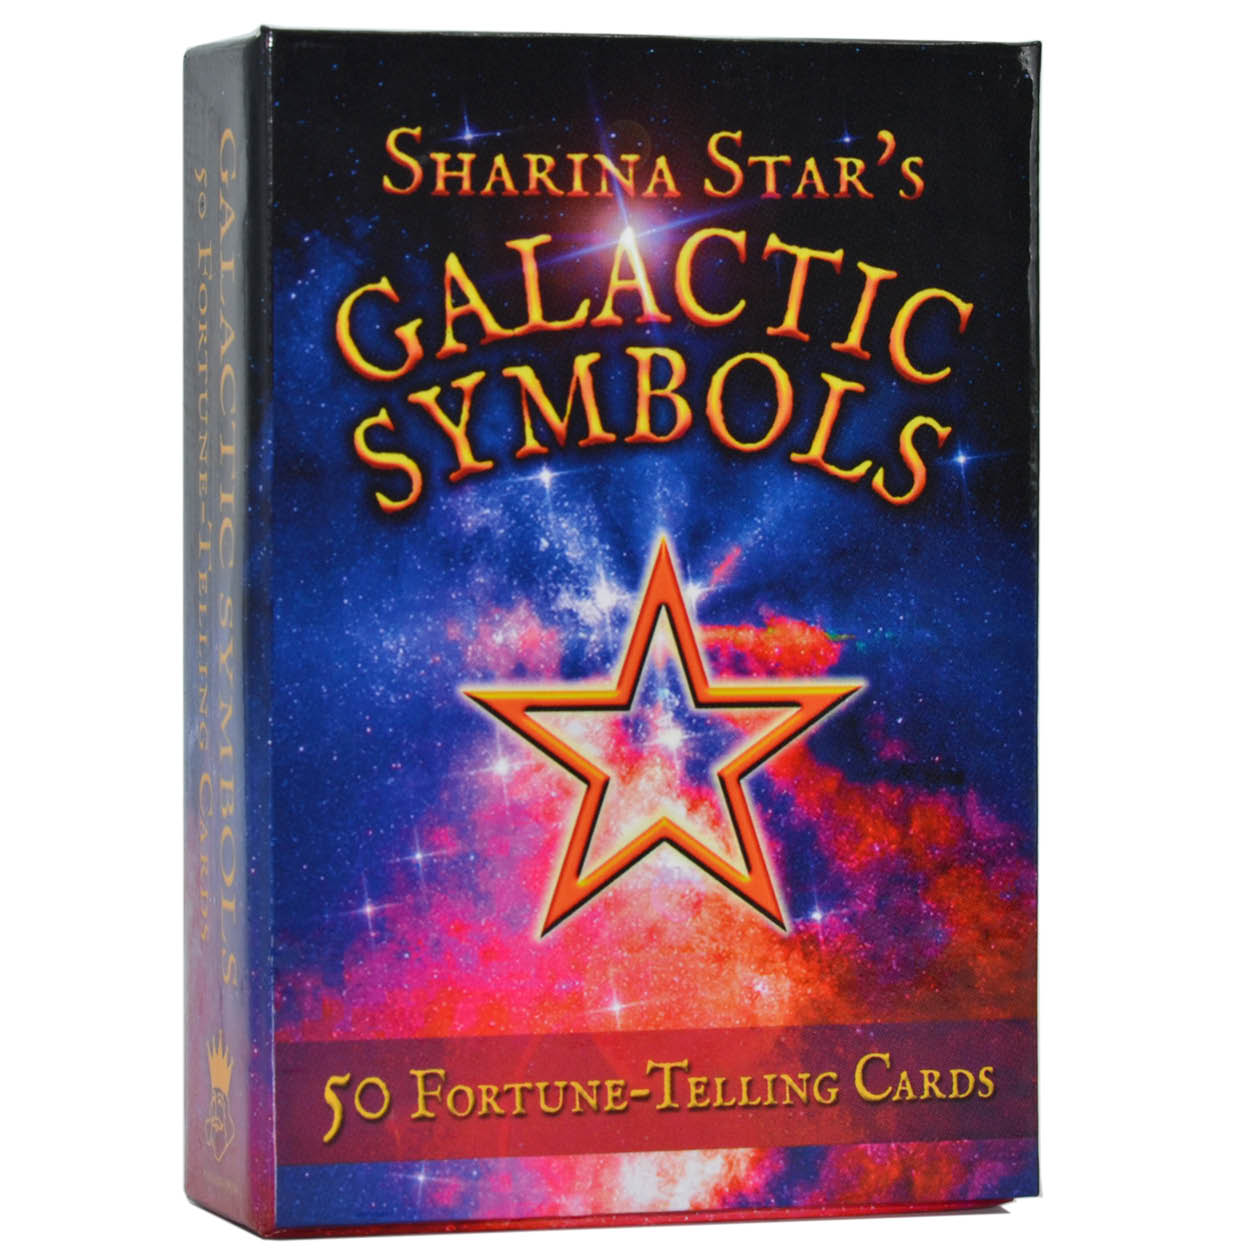 Sharina Star's Galactic Symbols Fortune Telling Cards